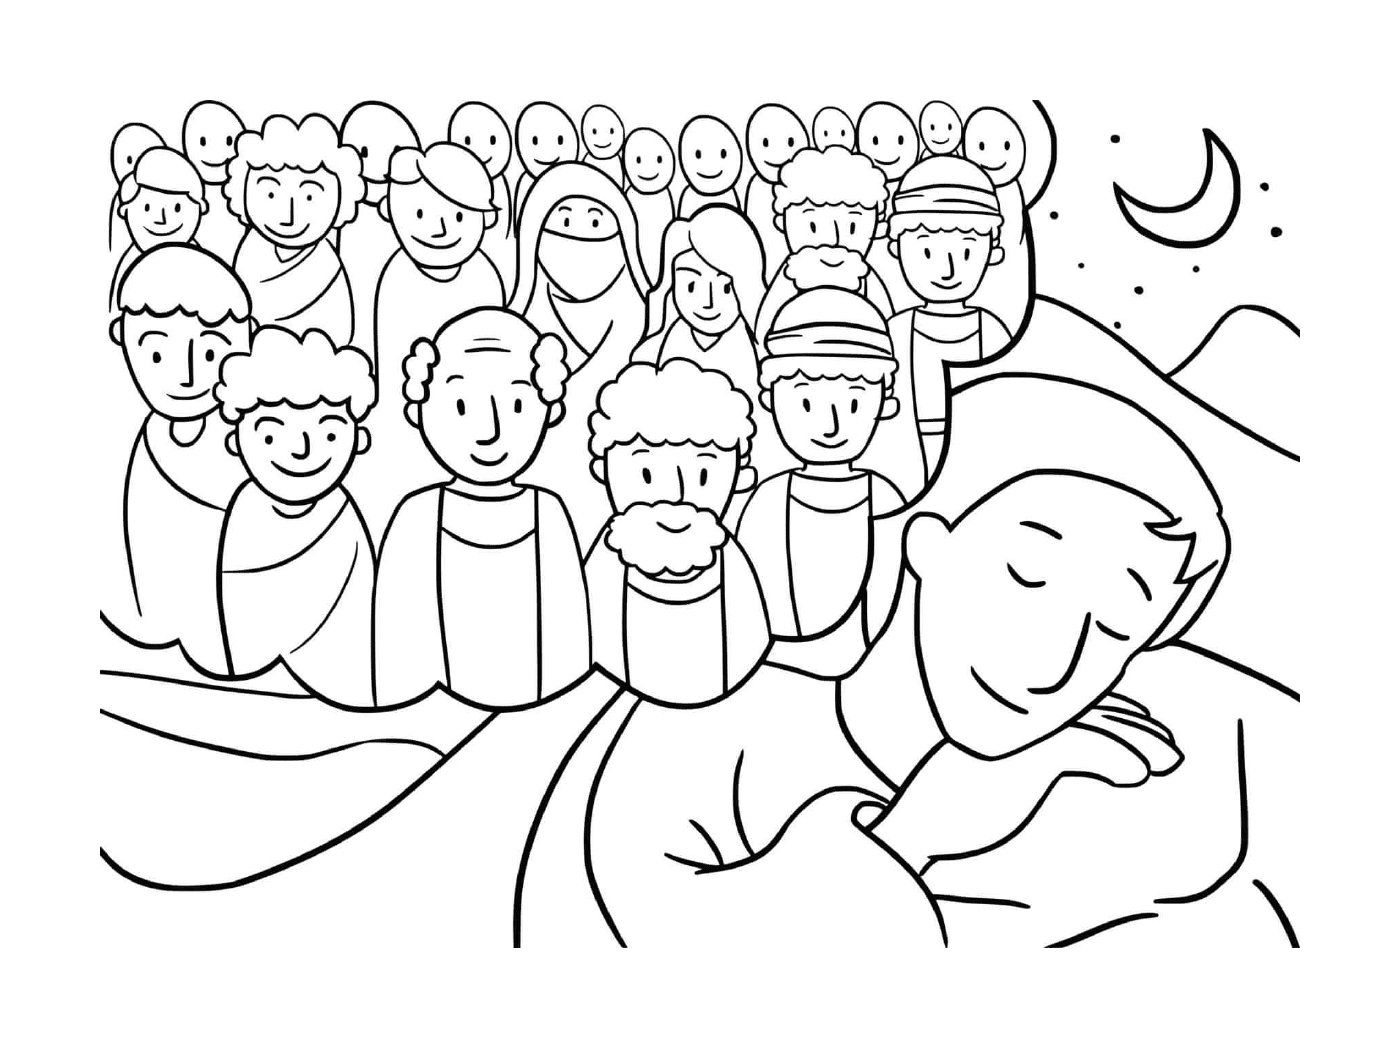  Grupo de personas reunidas alrededor de un hombre dormido 